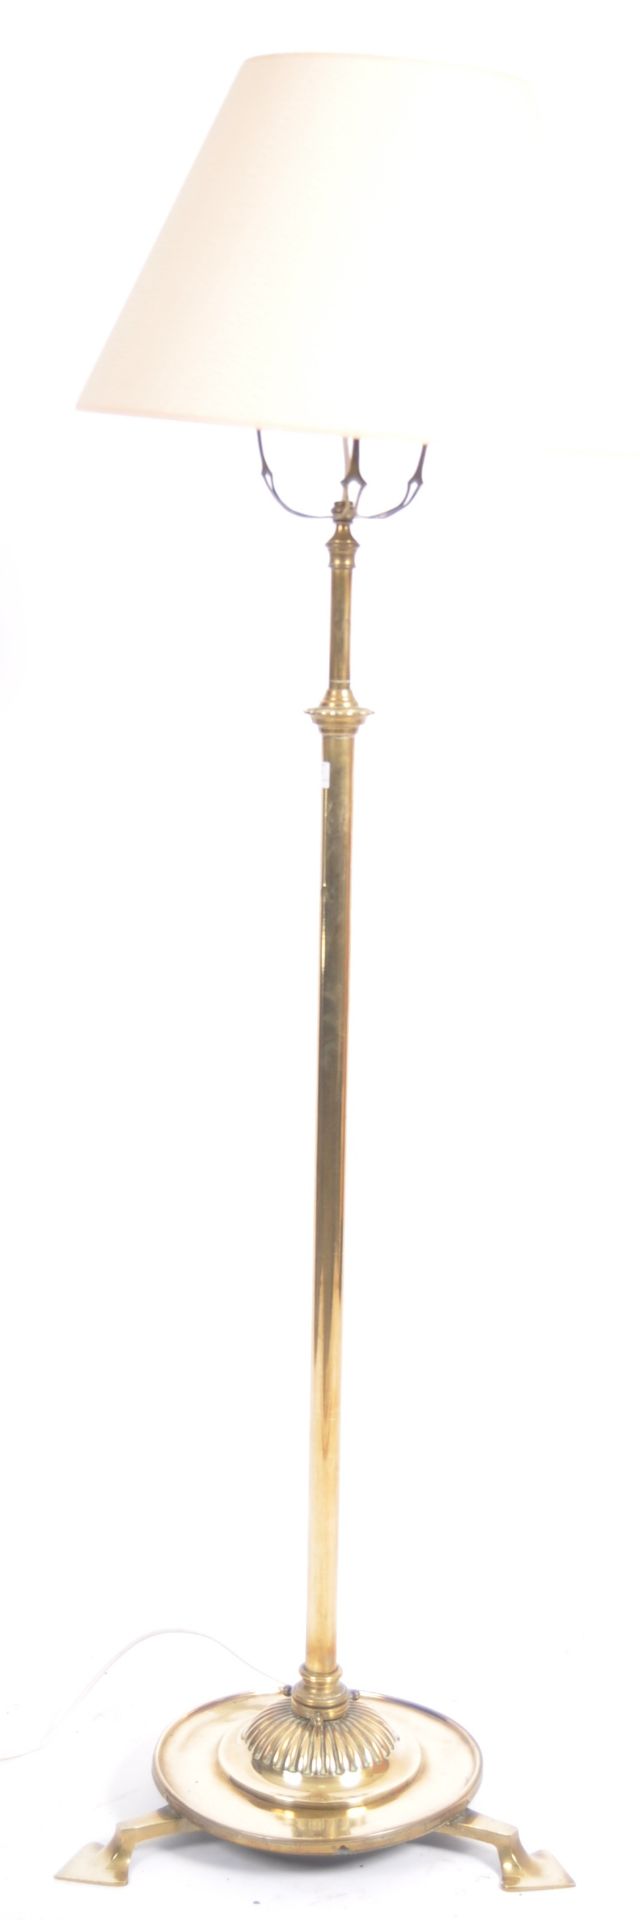 ART NOUVEAU BRASS TELESCOPIC STANDARD LAMP - Image 2 of 6